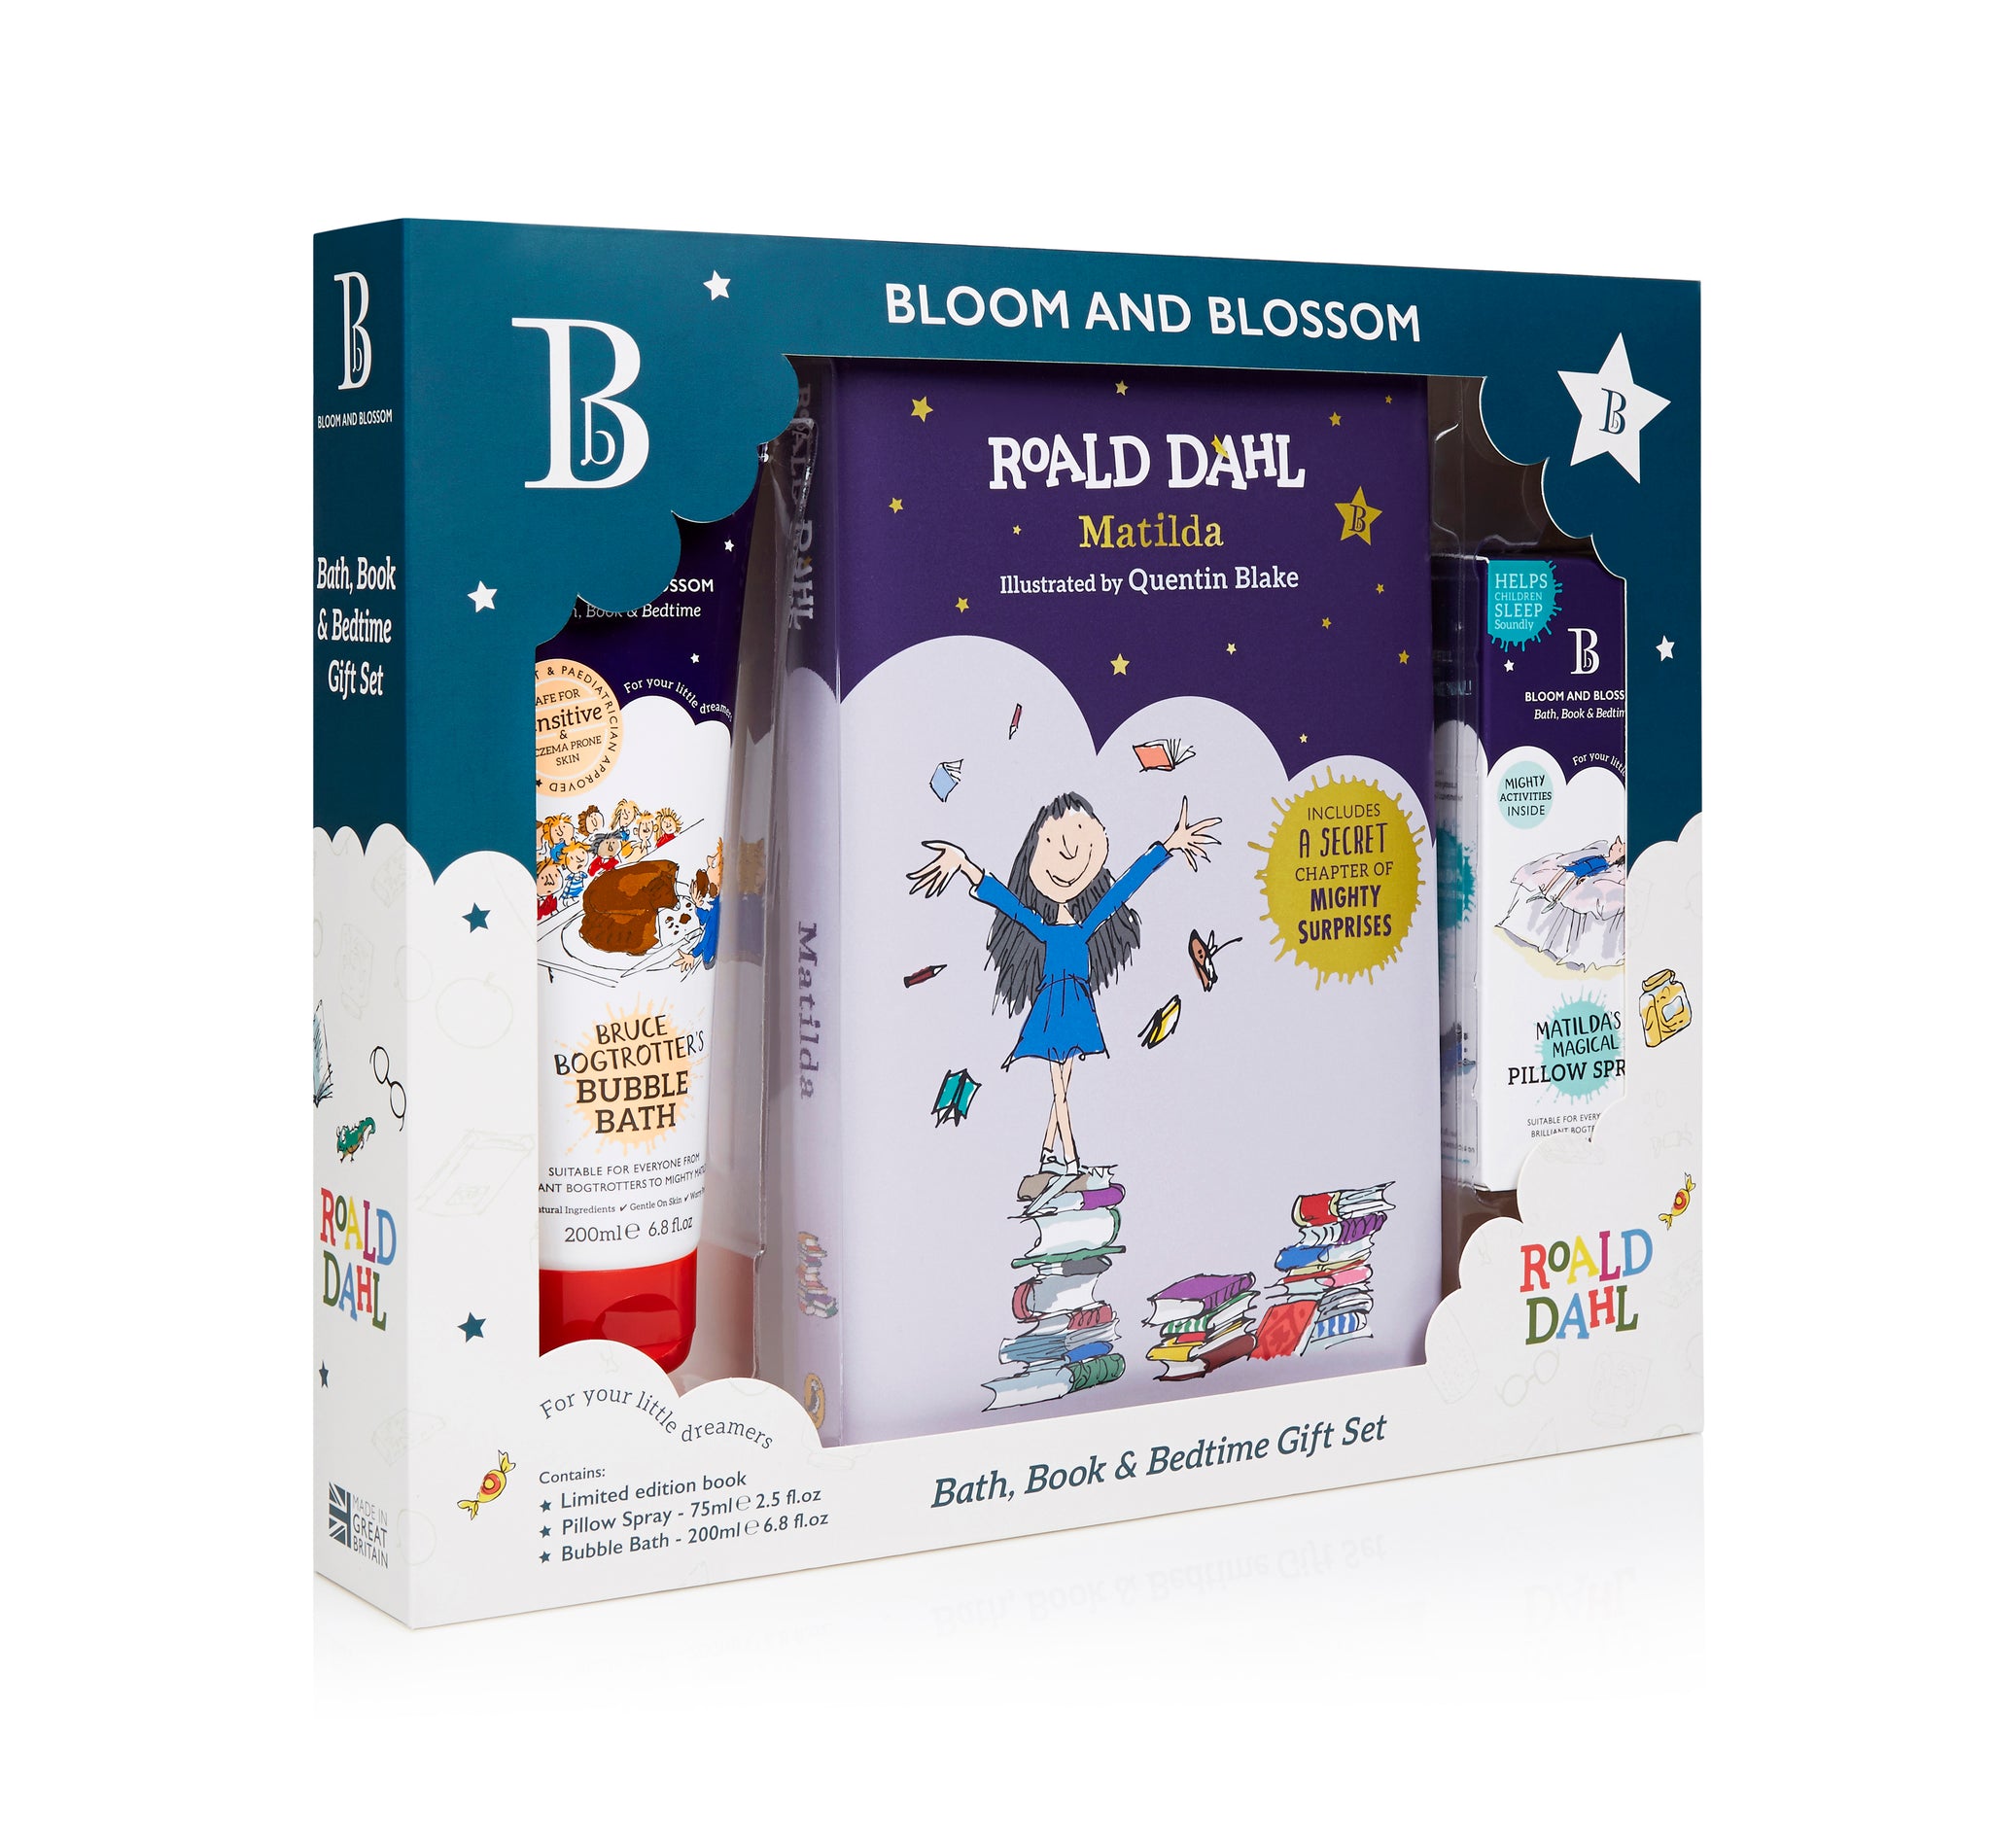 Bloom and Blossom Roald Dahl Matilda Bath, Book & Bedtime Gift Set 25% OFF